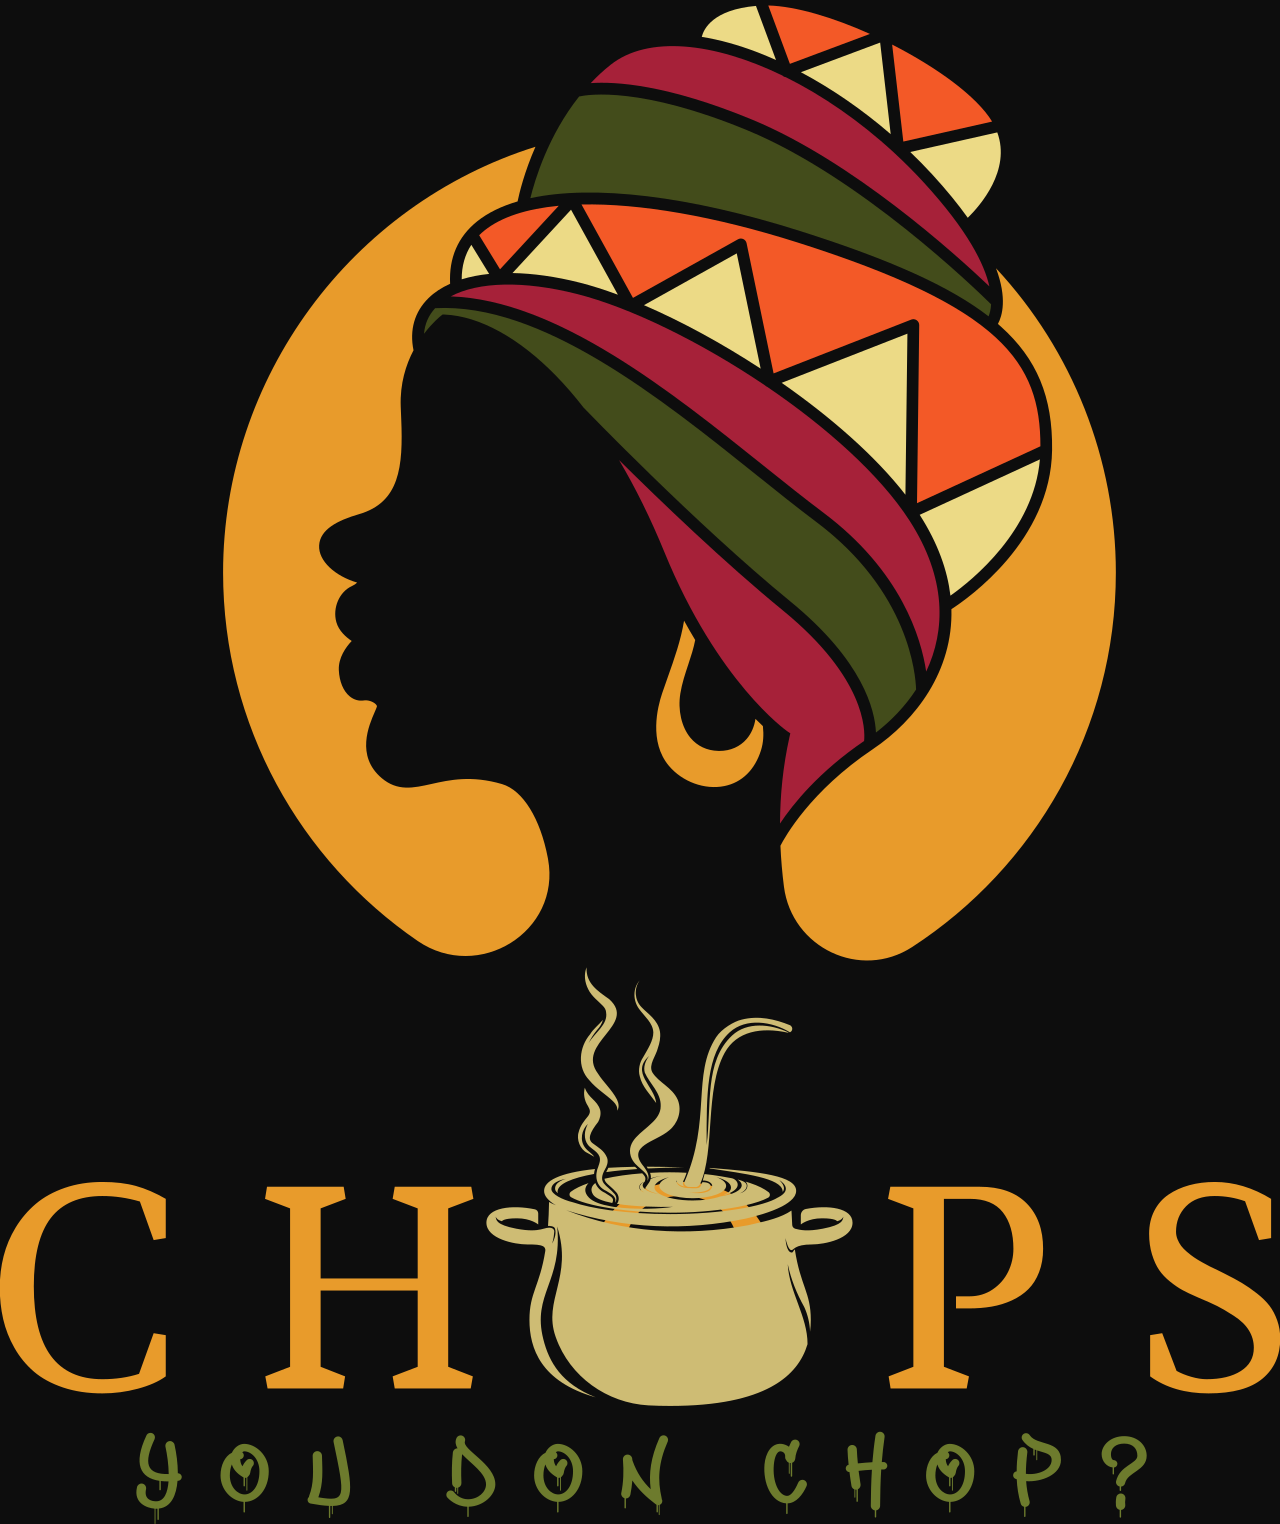 CHOPS's web page